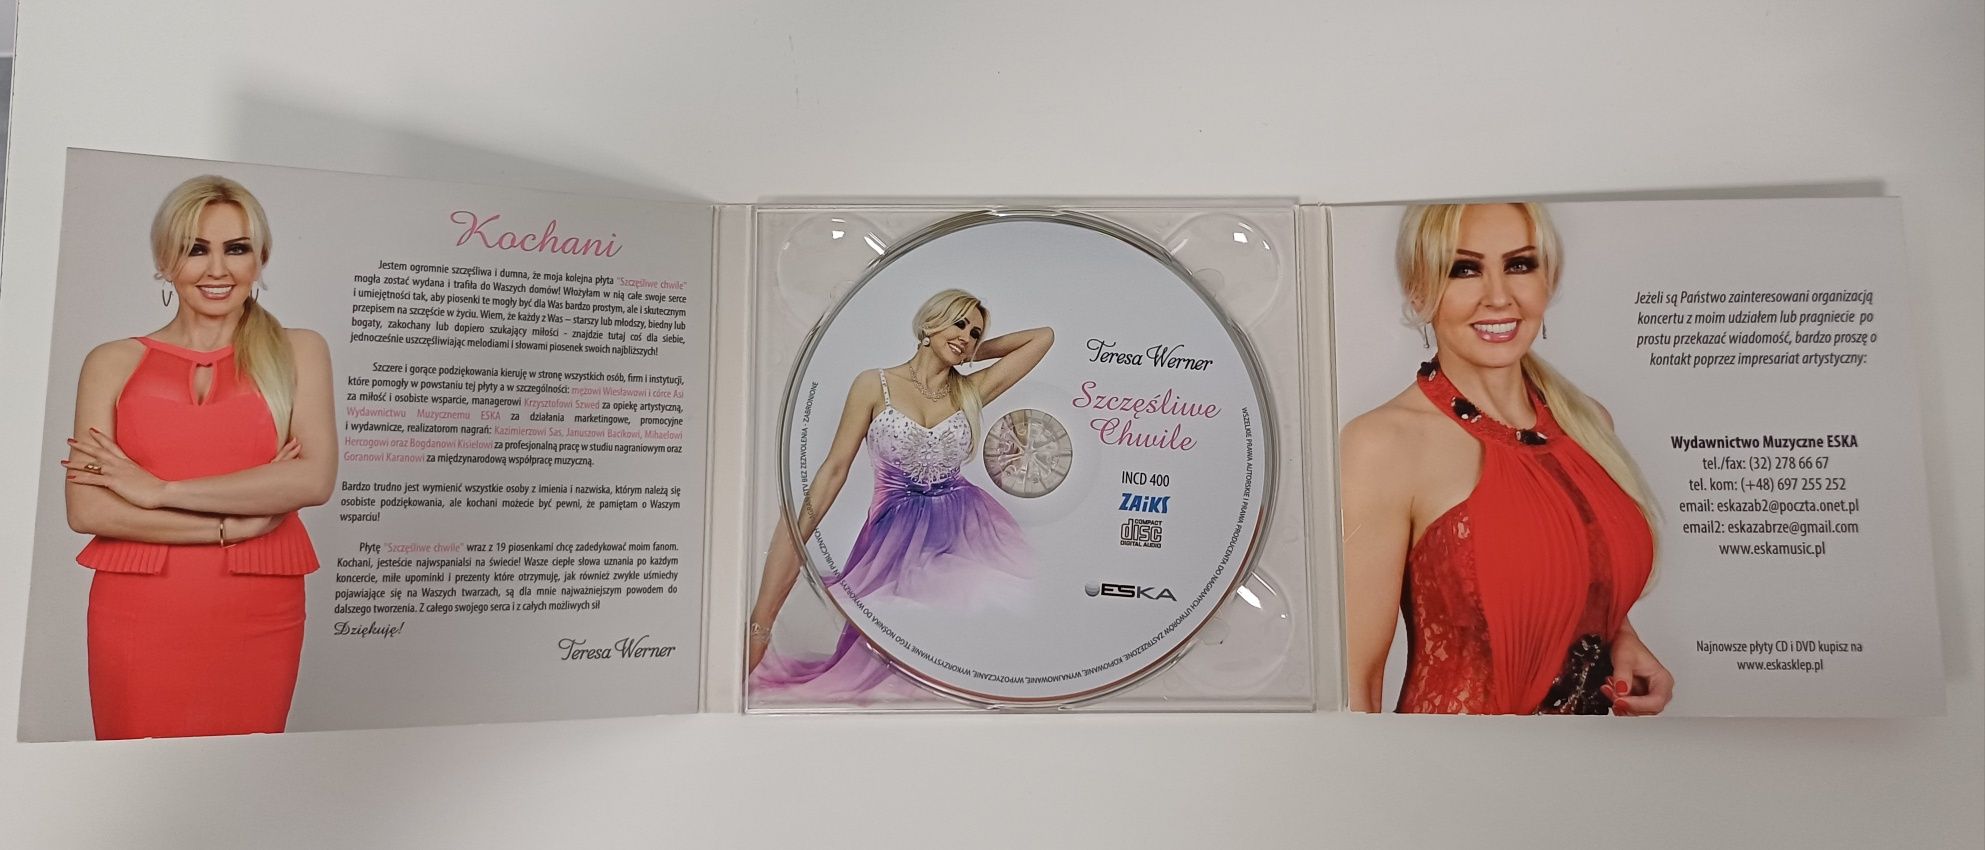 Teresa Werner Szczęśliwe chwile, płyta CD